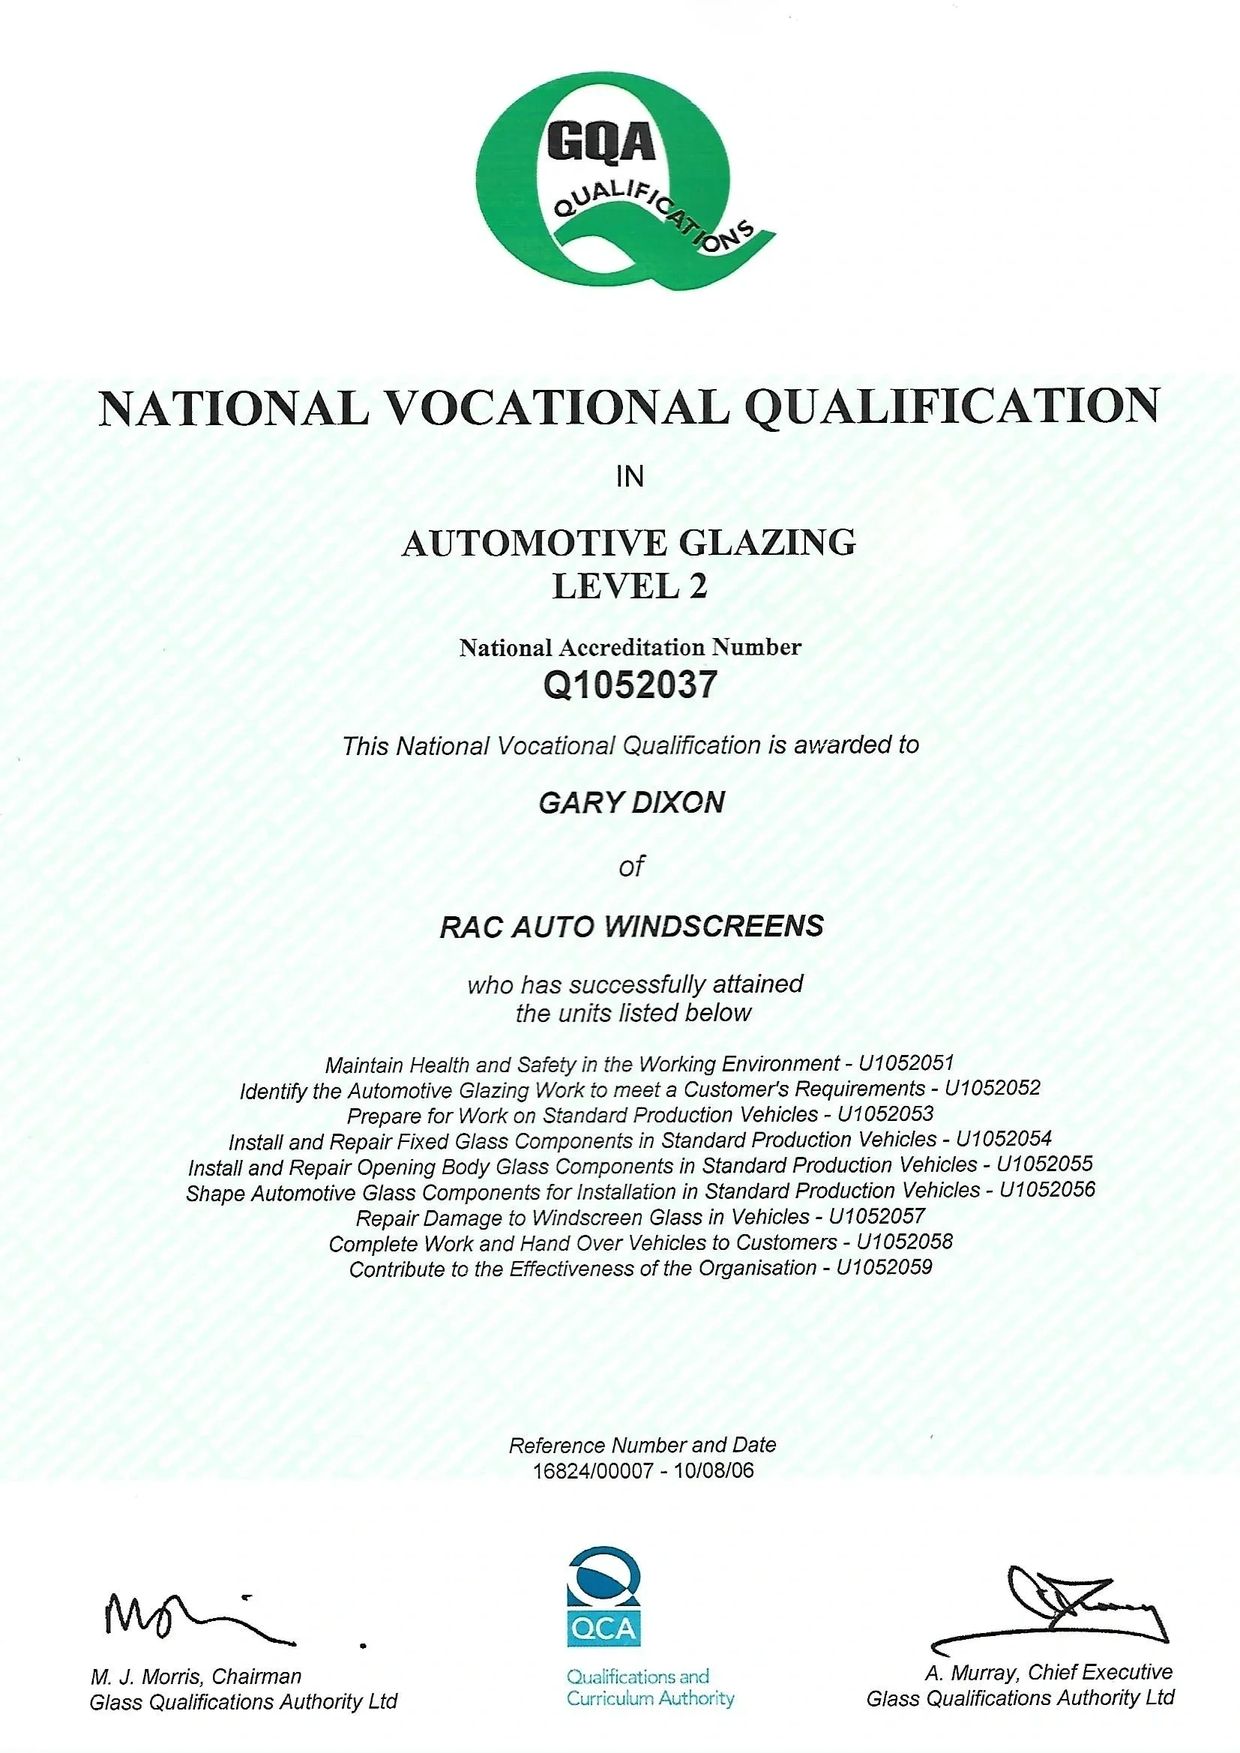 NVQ qualification 